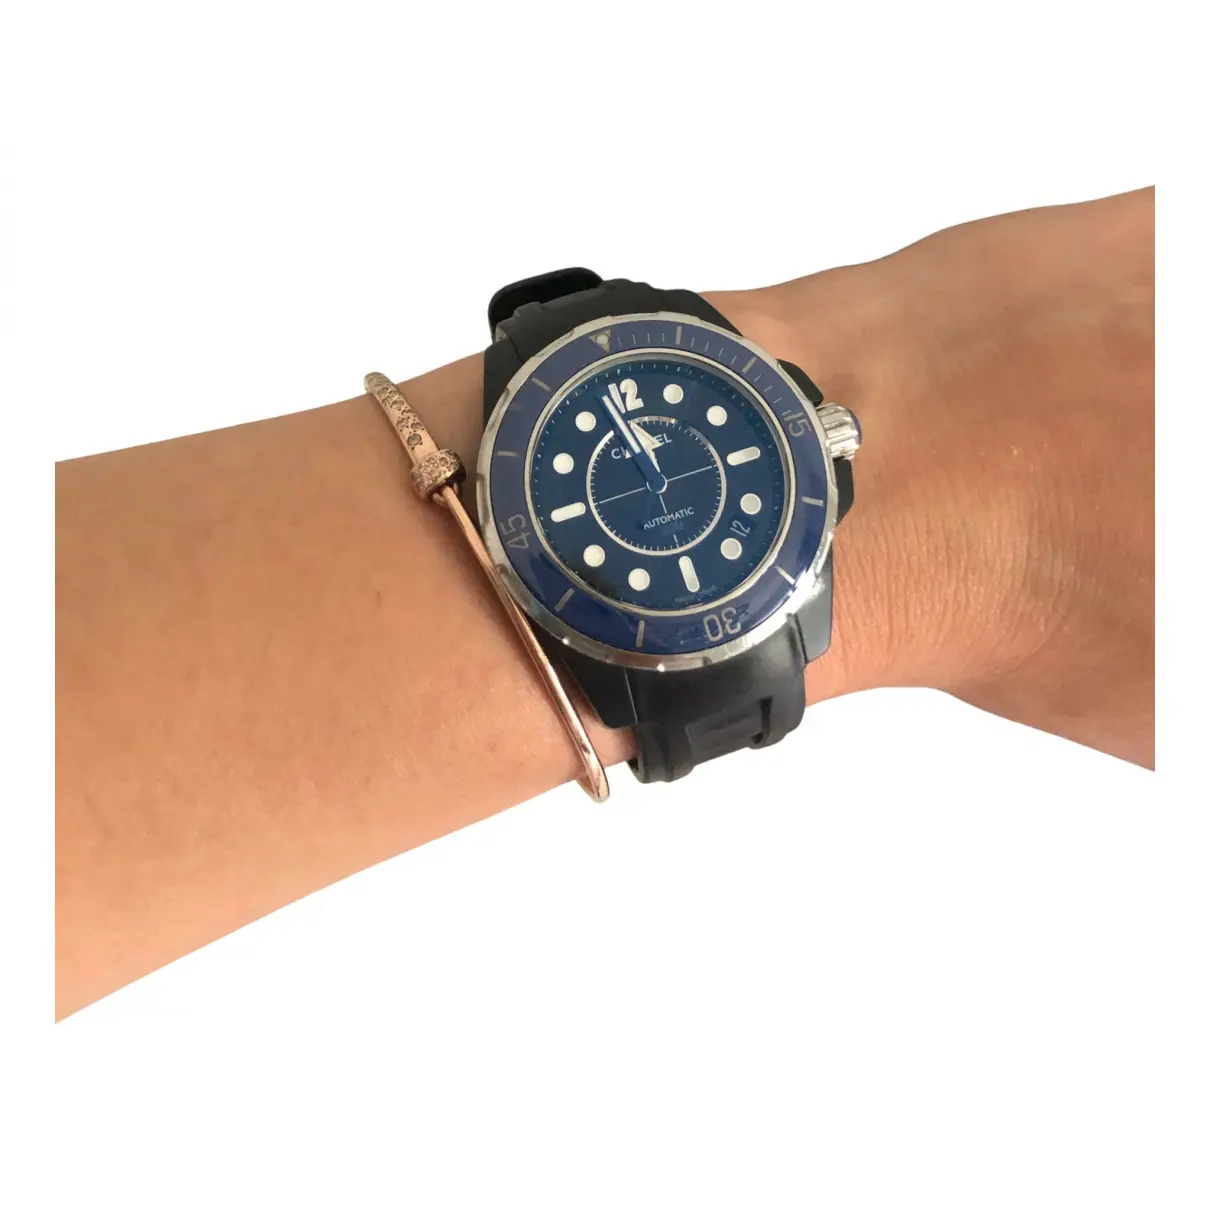 Buy Chanel J12 Marine watch online